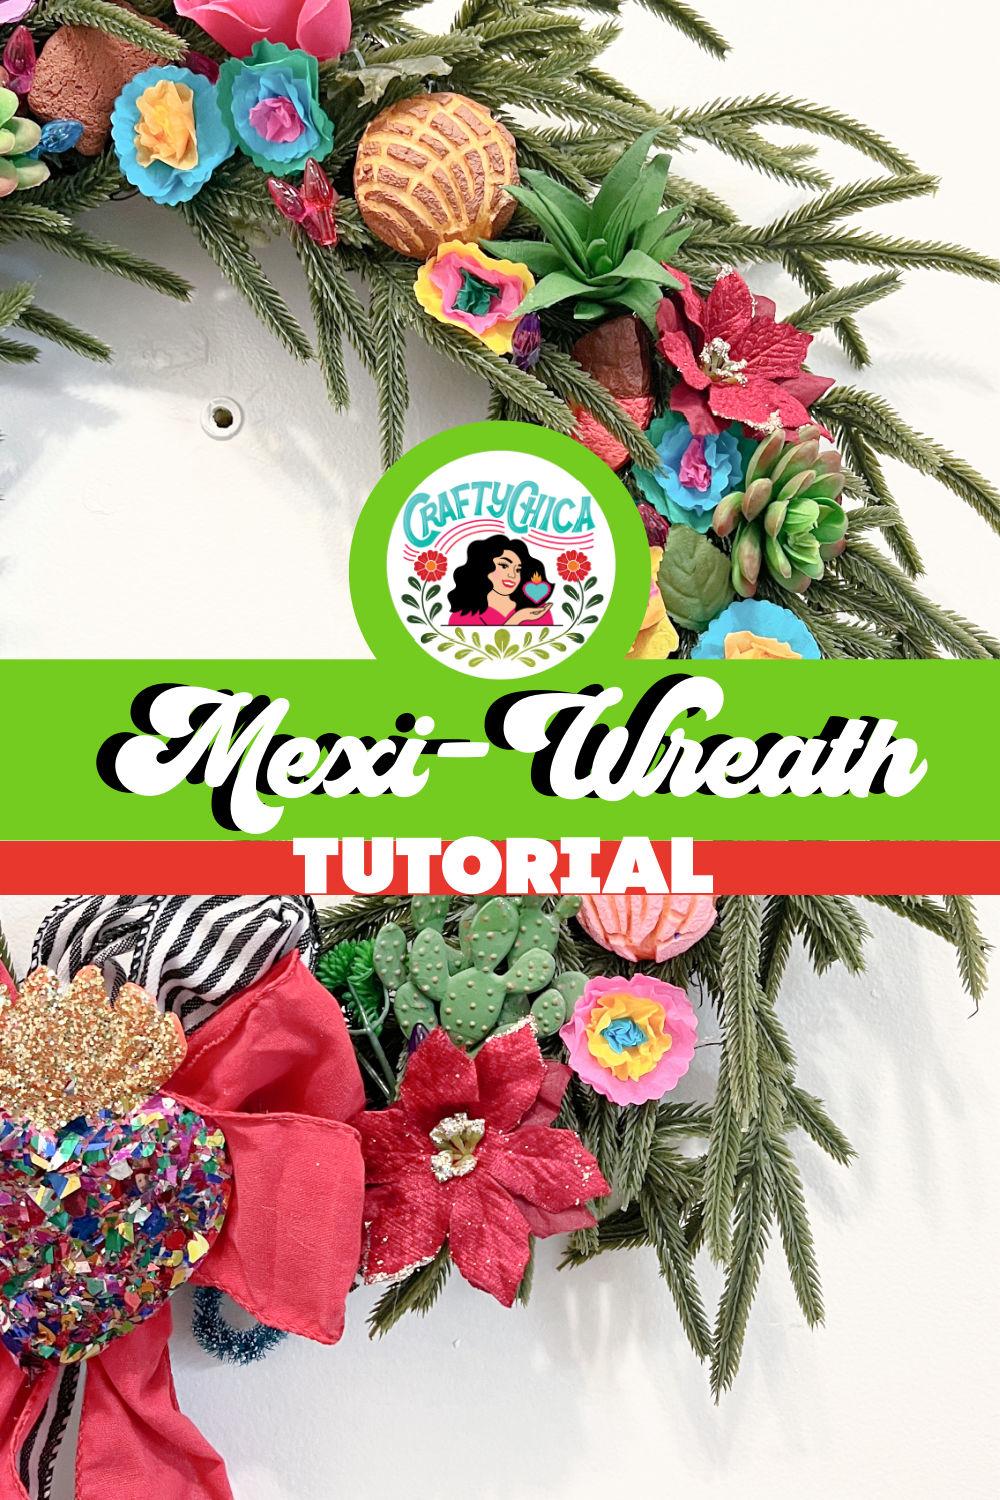 Mexican Christmas wreath